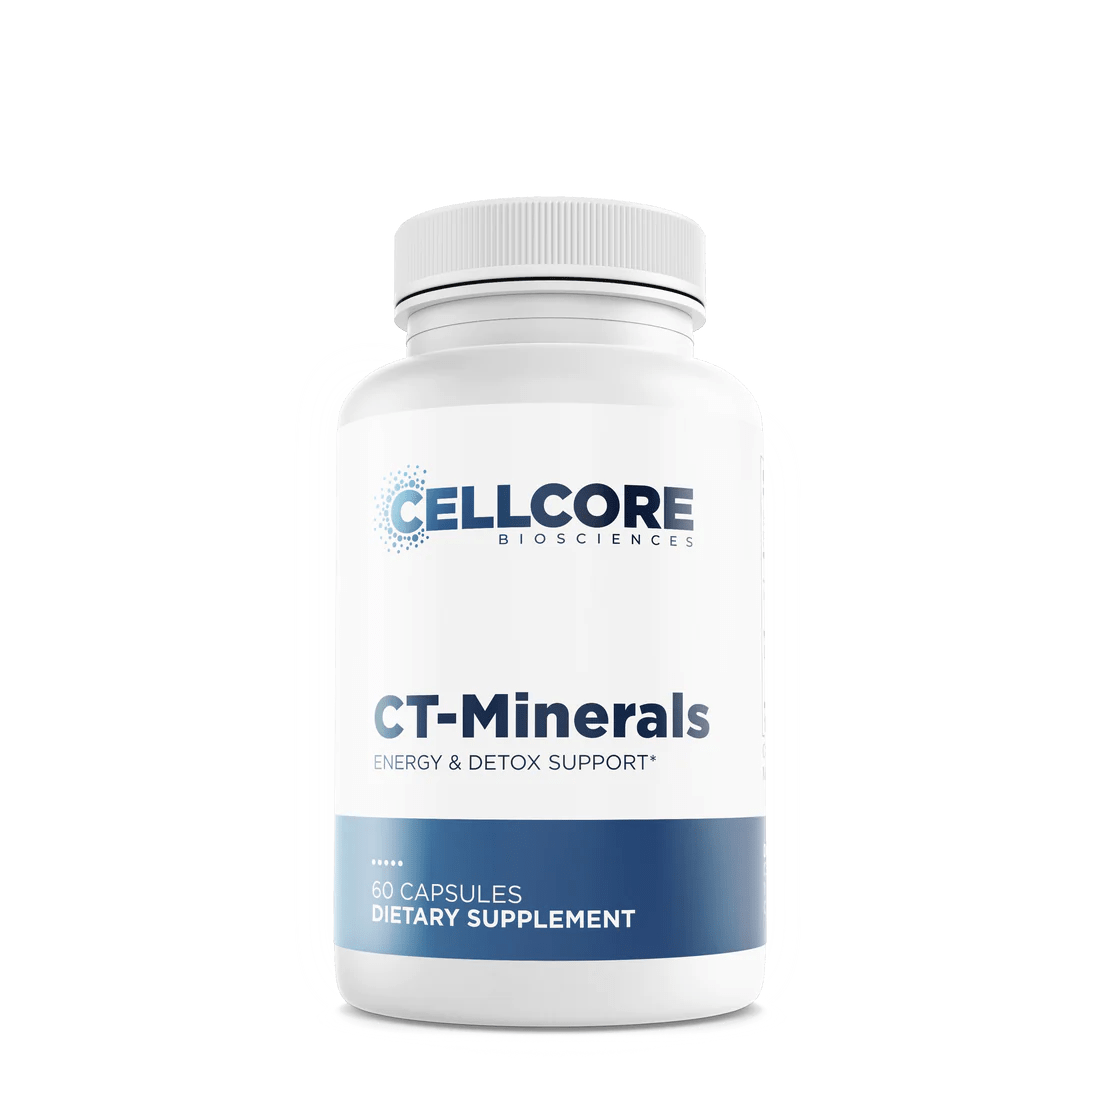 CellCore Biosciences Nutritional CT-Minerals by CellCore Biosciences